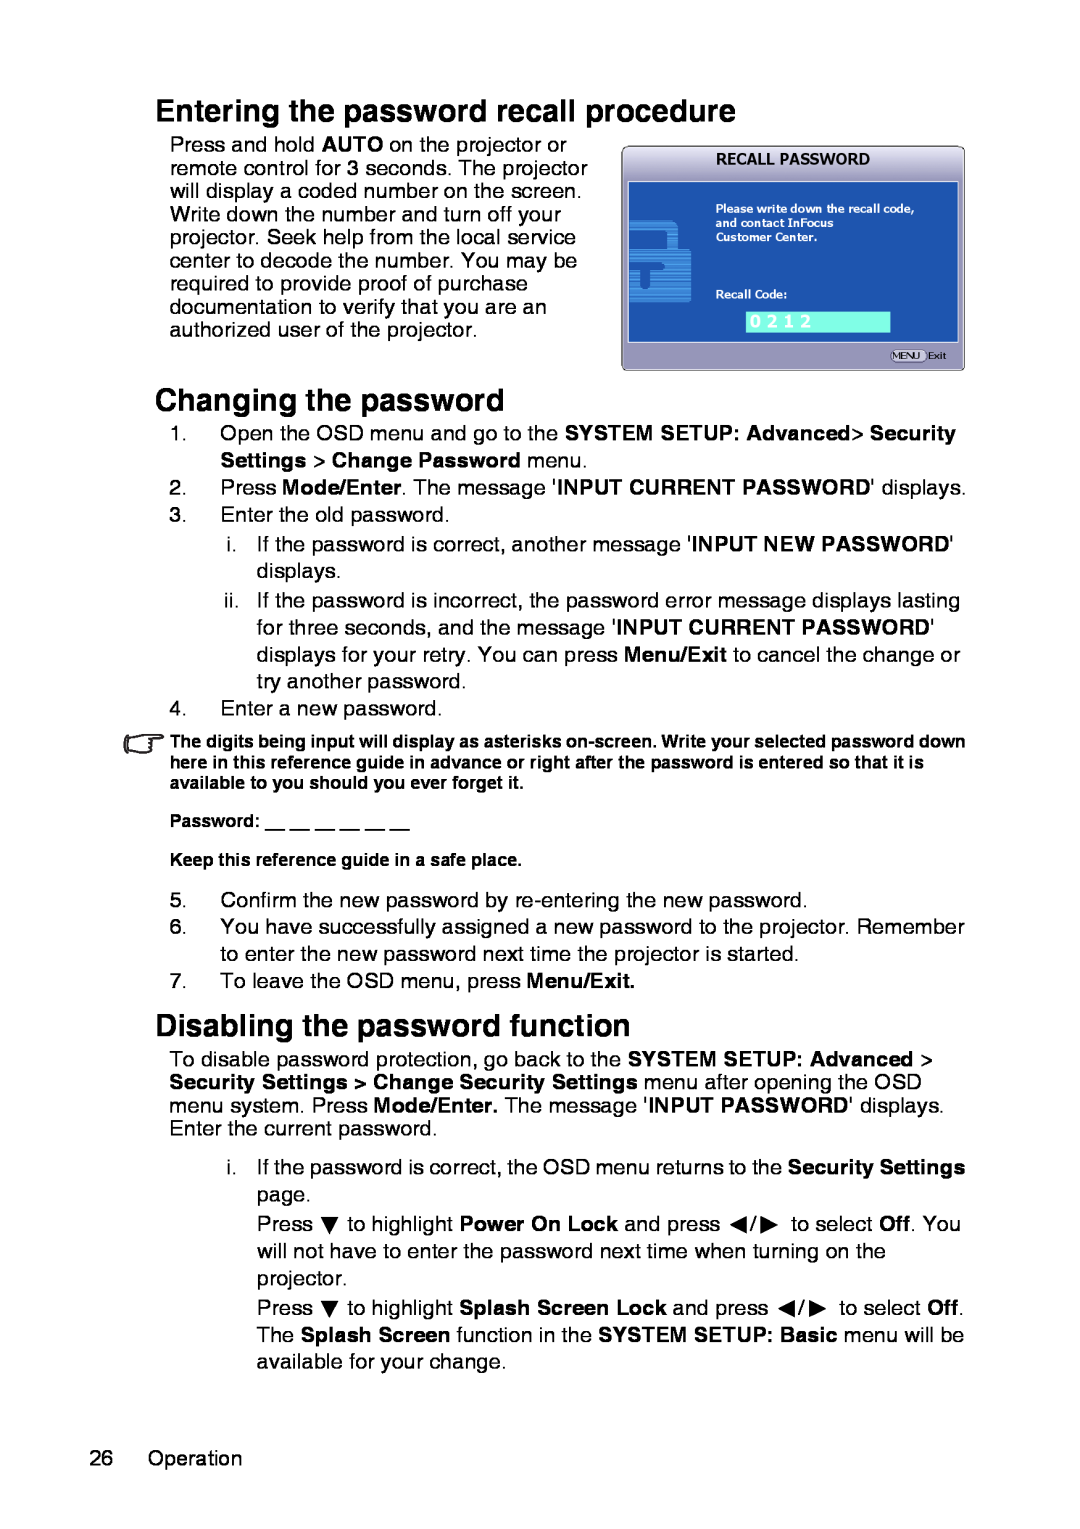 InFocus XS1 manual Entering the password recall procedure, Changing the password, Disabling the password function 